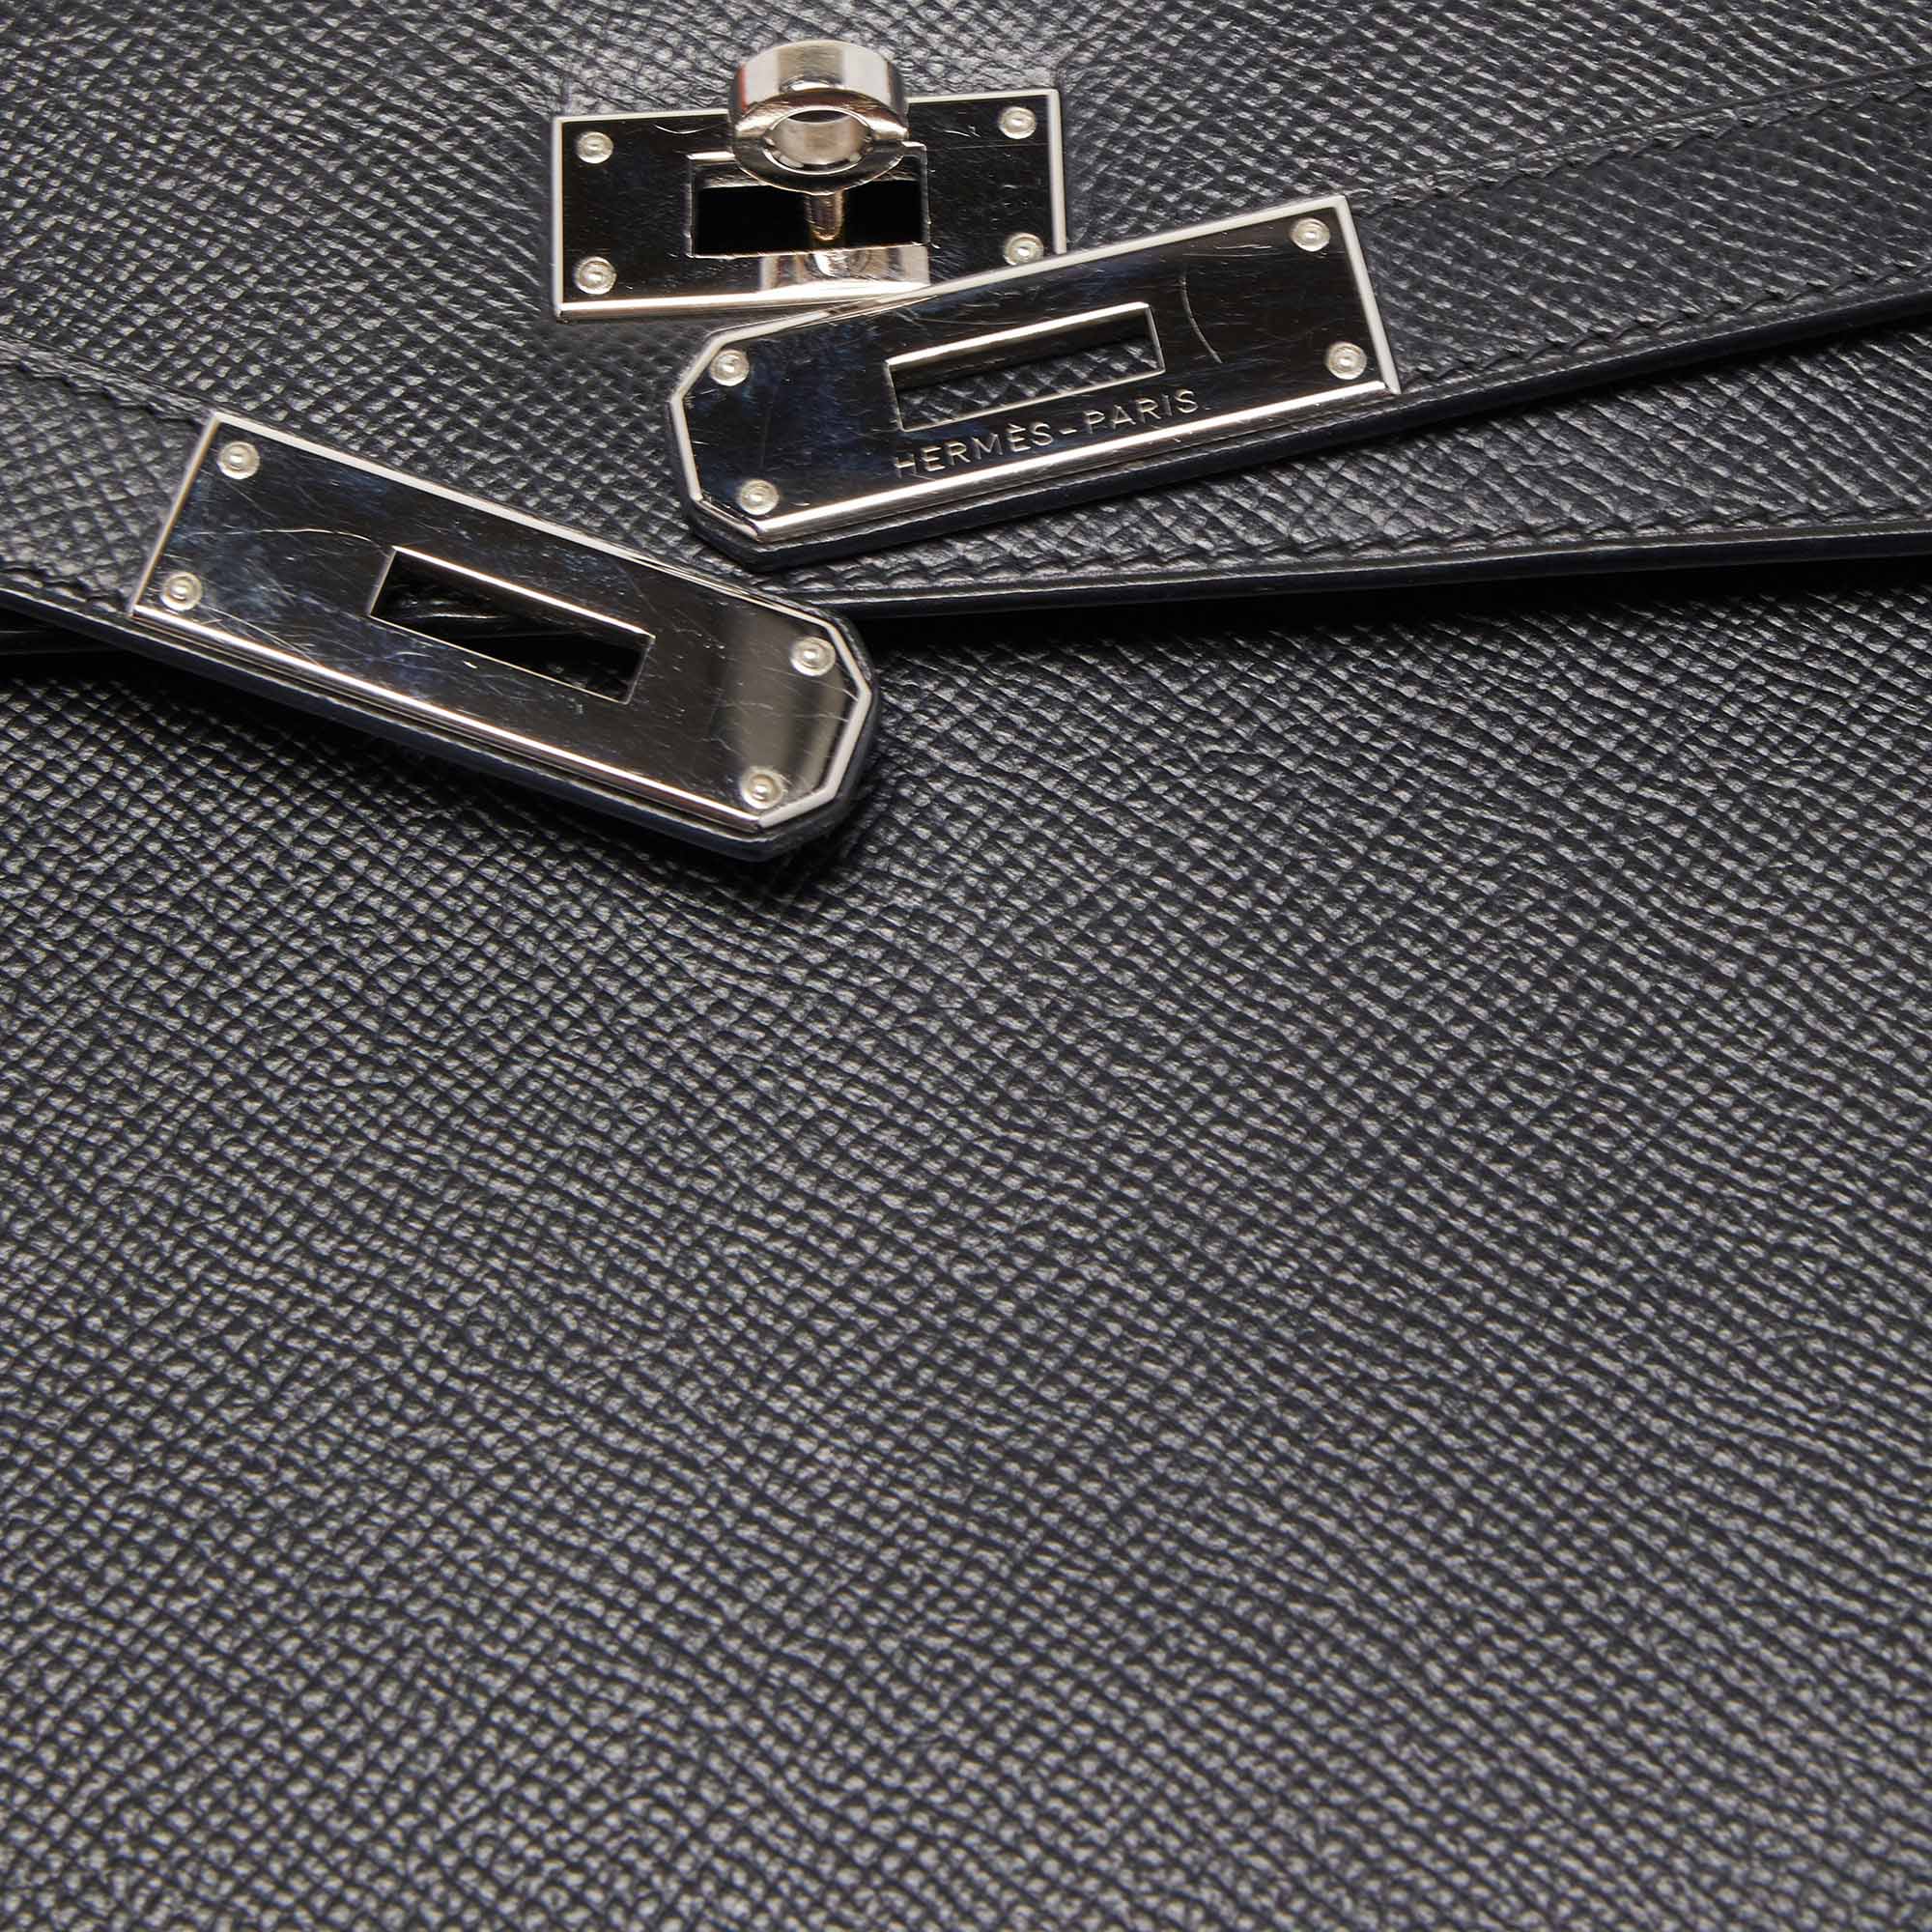 New Hermès Kelly 28 sellier handbag strap in black Epsom leather